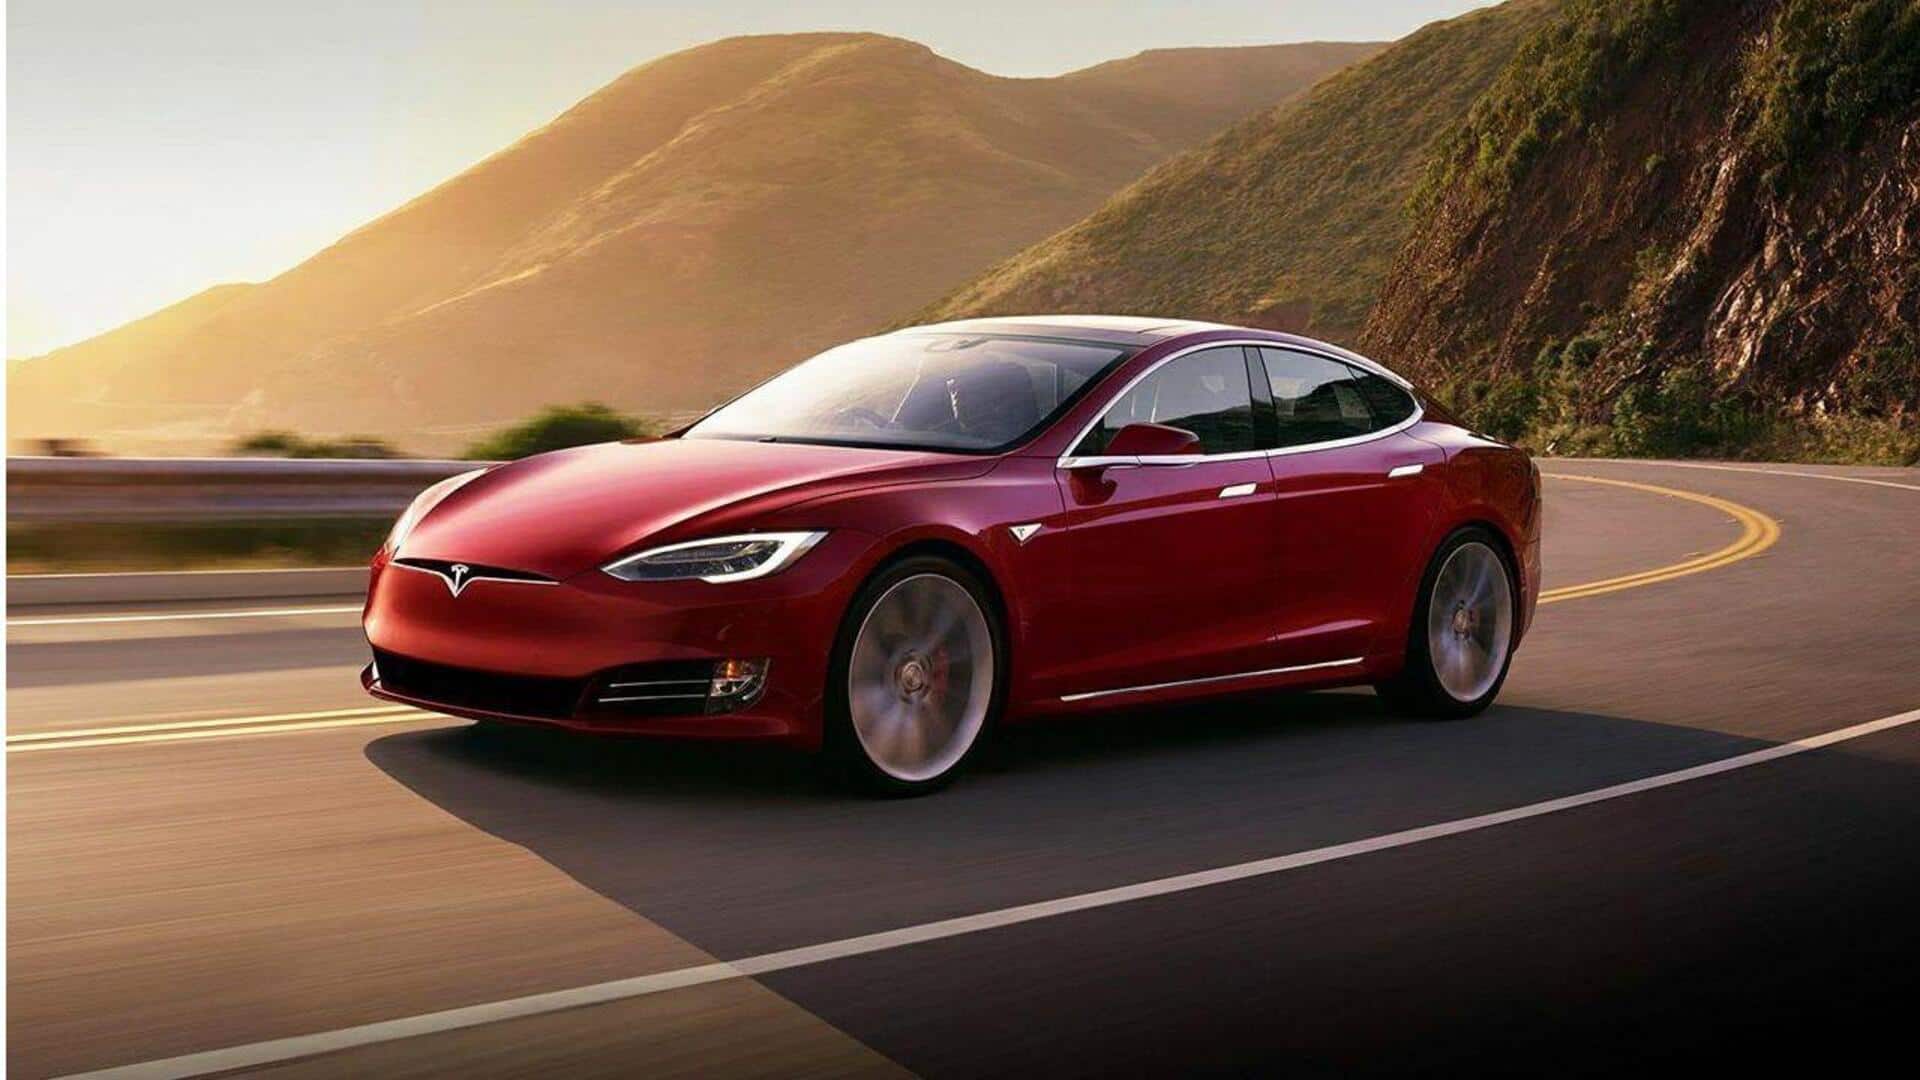 Tesla Model S tops value depreciation chart for electric vehicles